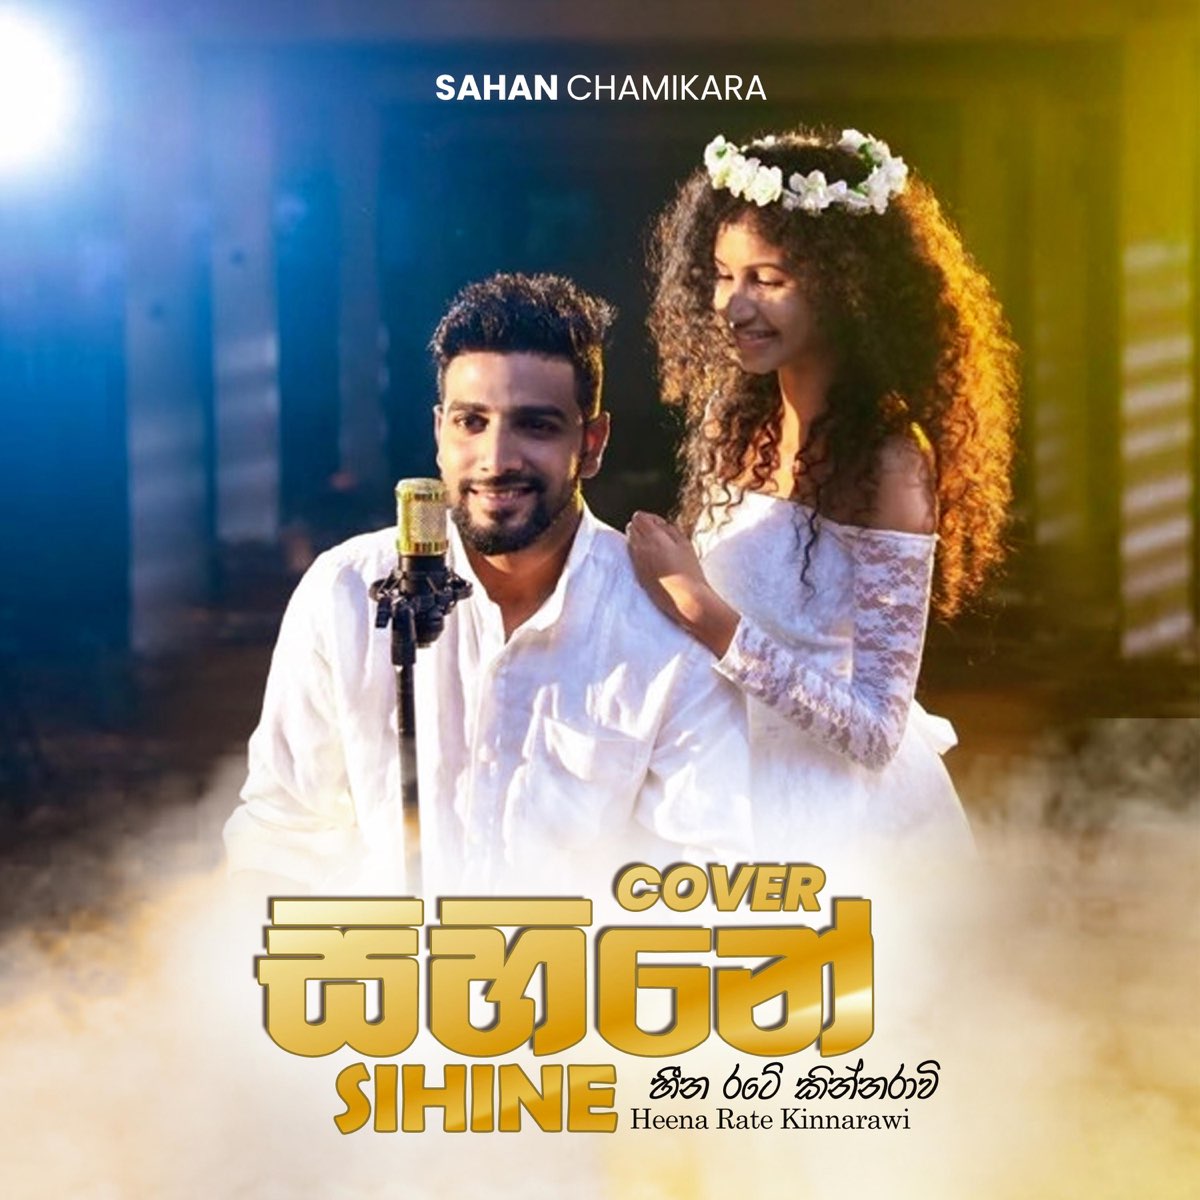 Sihine (Heena rate kinnarawi) - Single by Sahan Chamikara on Apple Music